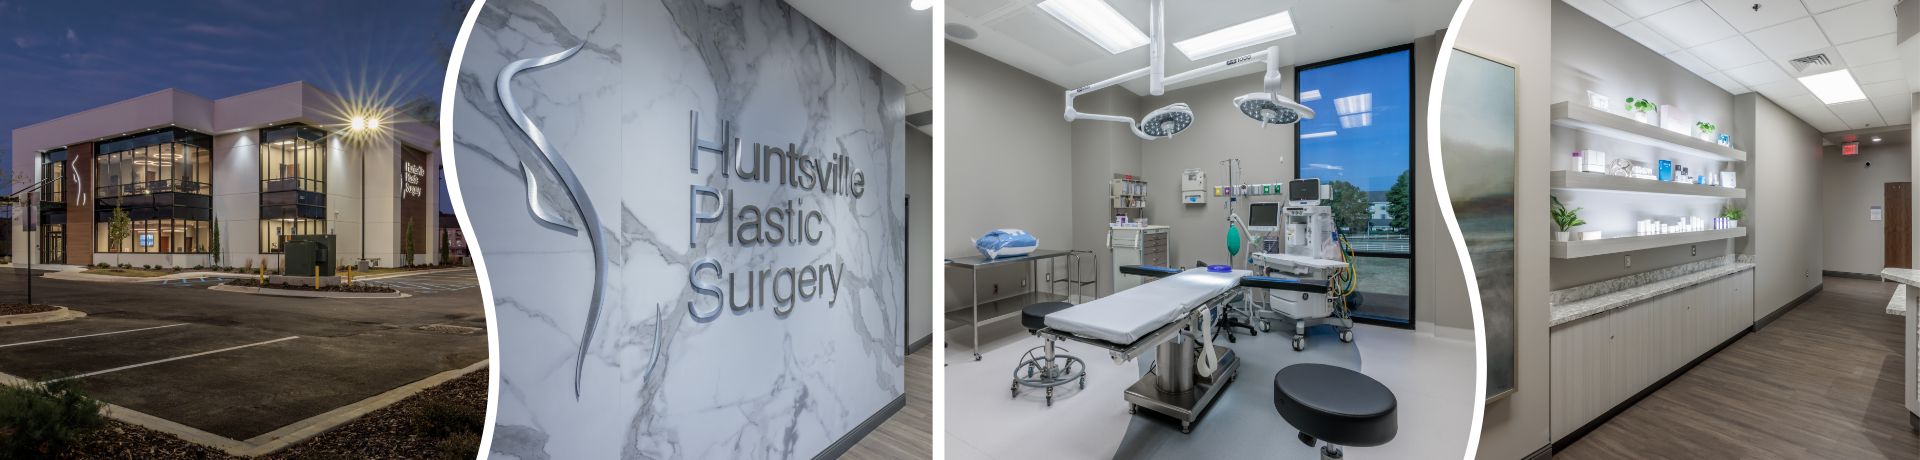 Wilson Plastic Surgery Huntsville Alabama